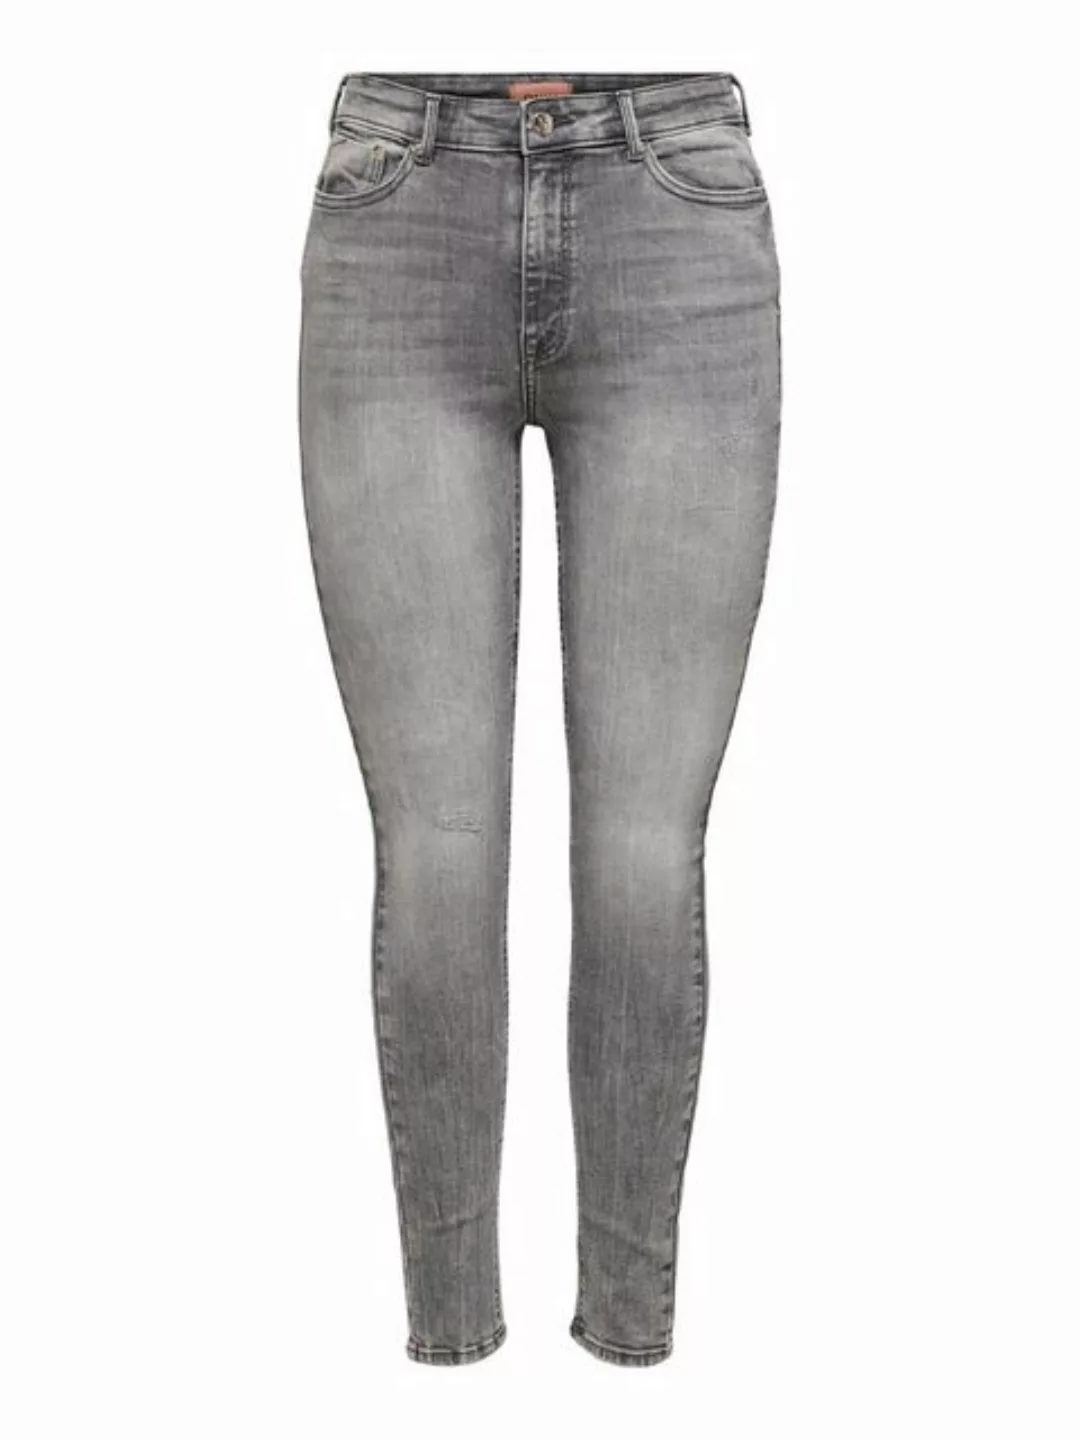 Only Damen Jeans ONLPAOLA LIFE HW SKINNY AZG852 - Skinny Fit - Grau - Mediu günstig online kaufen